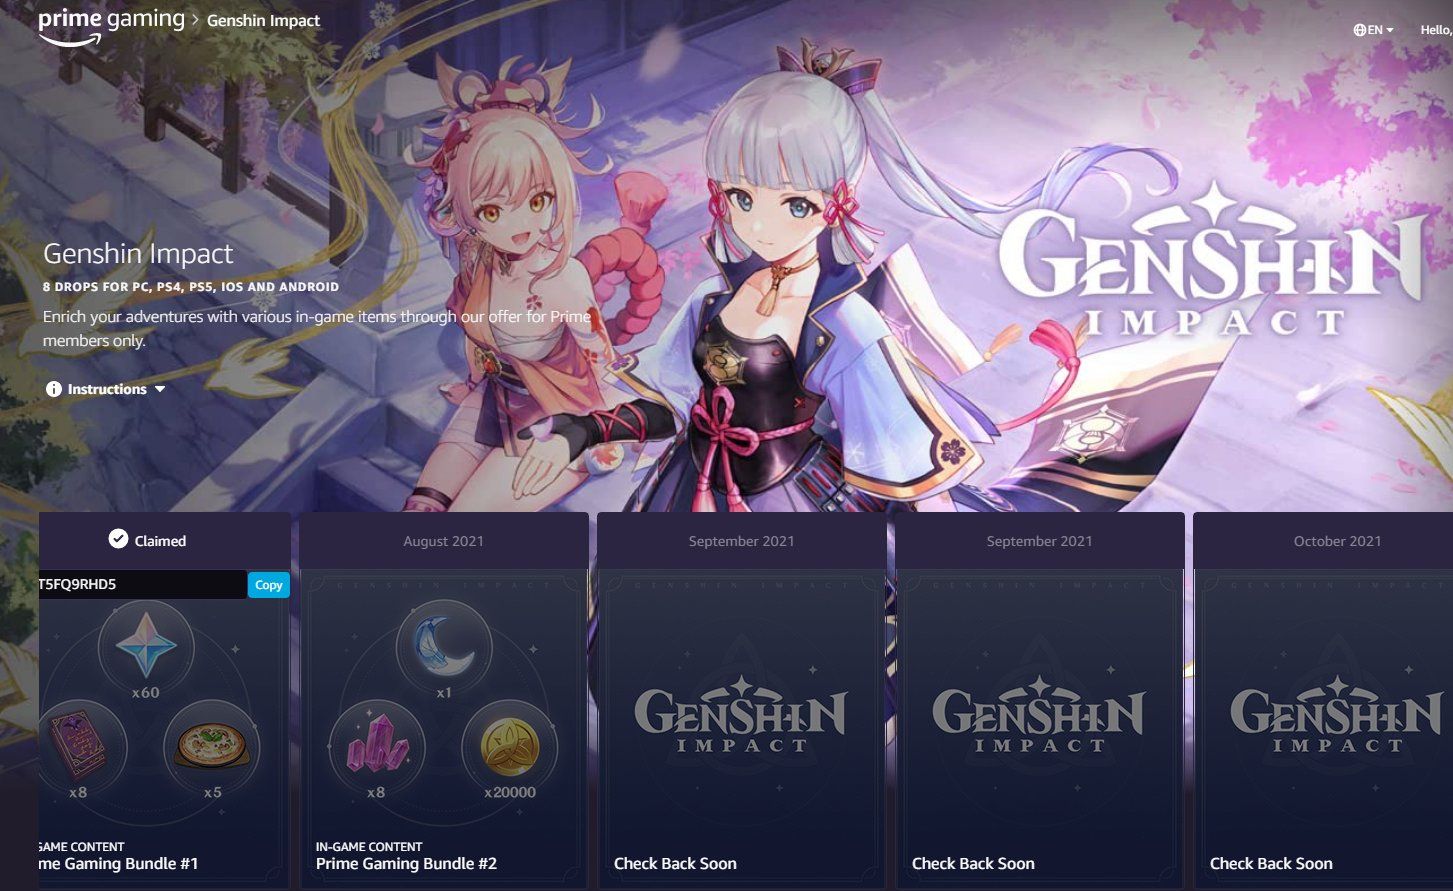 Genshin Impact Twitch Prime rewards include Primogems and